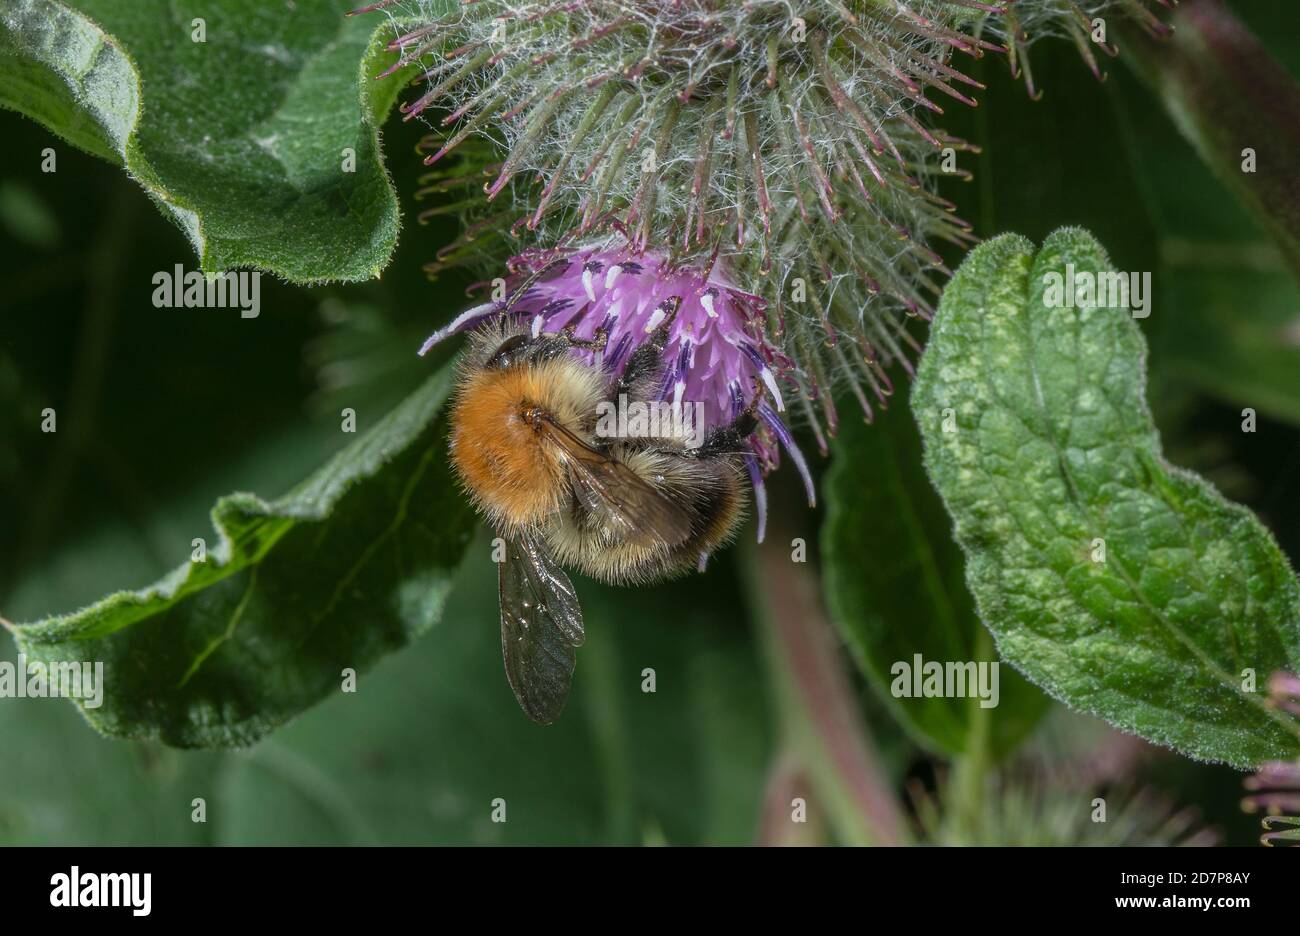 Common Carder Bumblebee, Bombus pascuorum feeding on Burdock flowers. Stock Photo